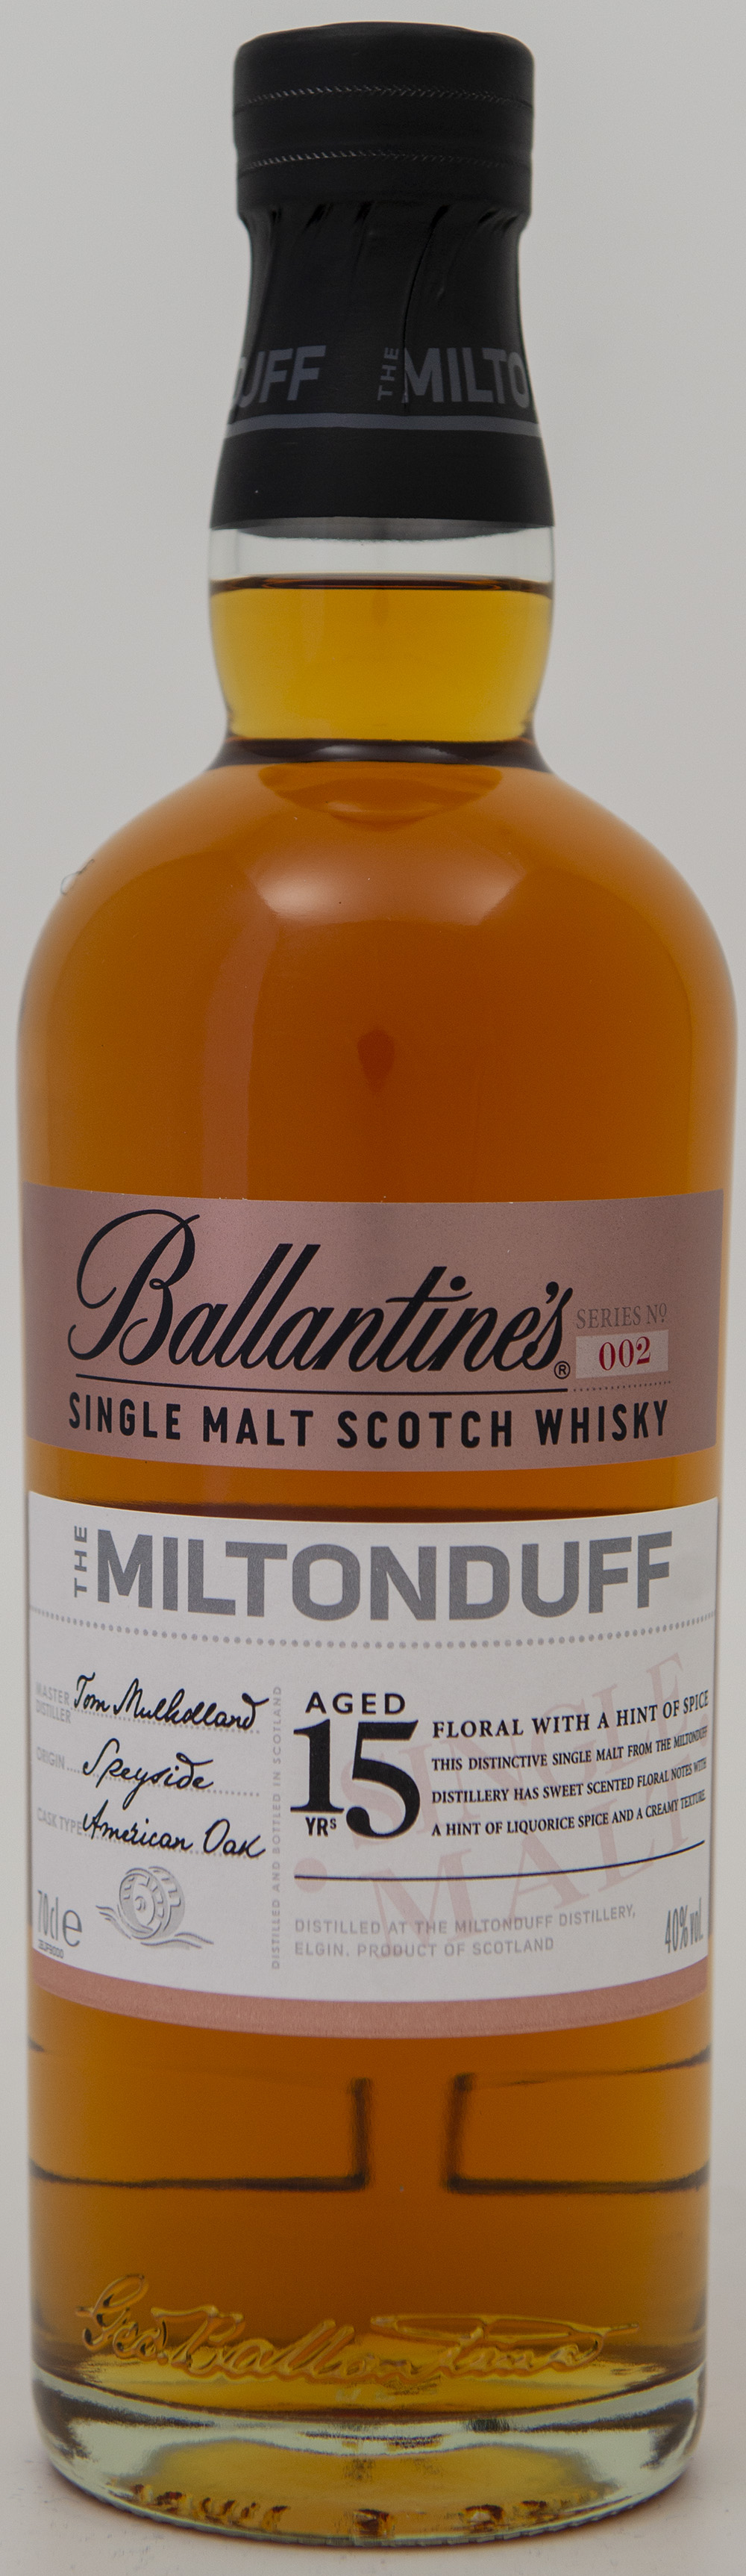 Billede: DSC_3924 - Ballantines Series 002 - The Miltonduff 15.jpg